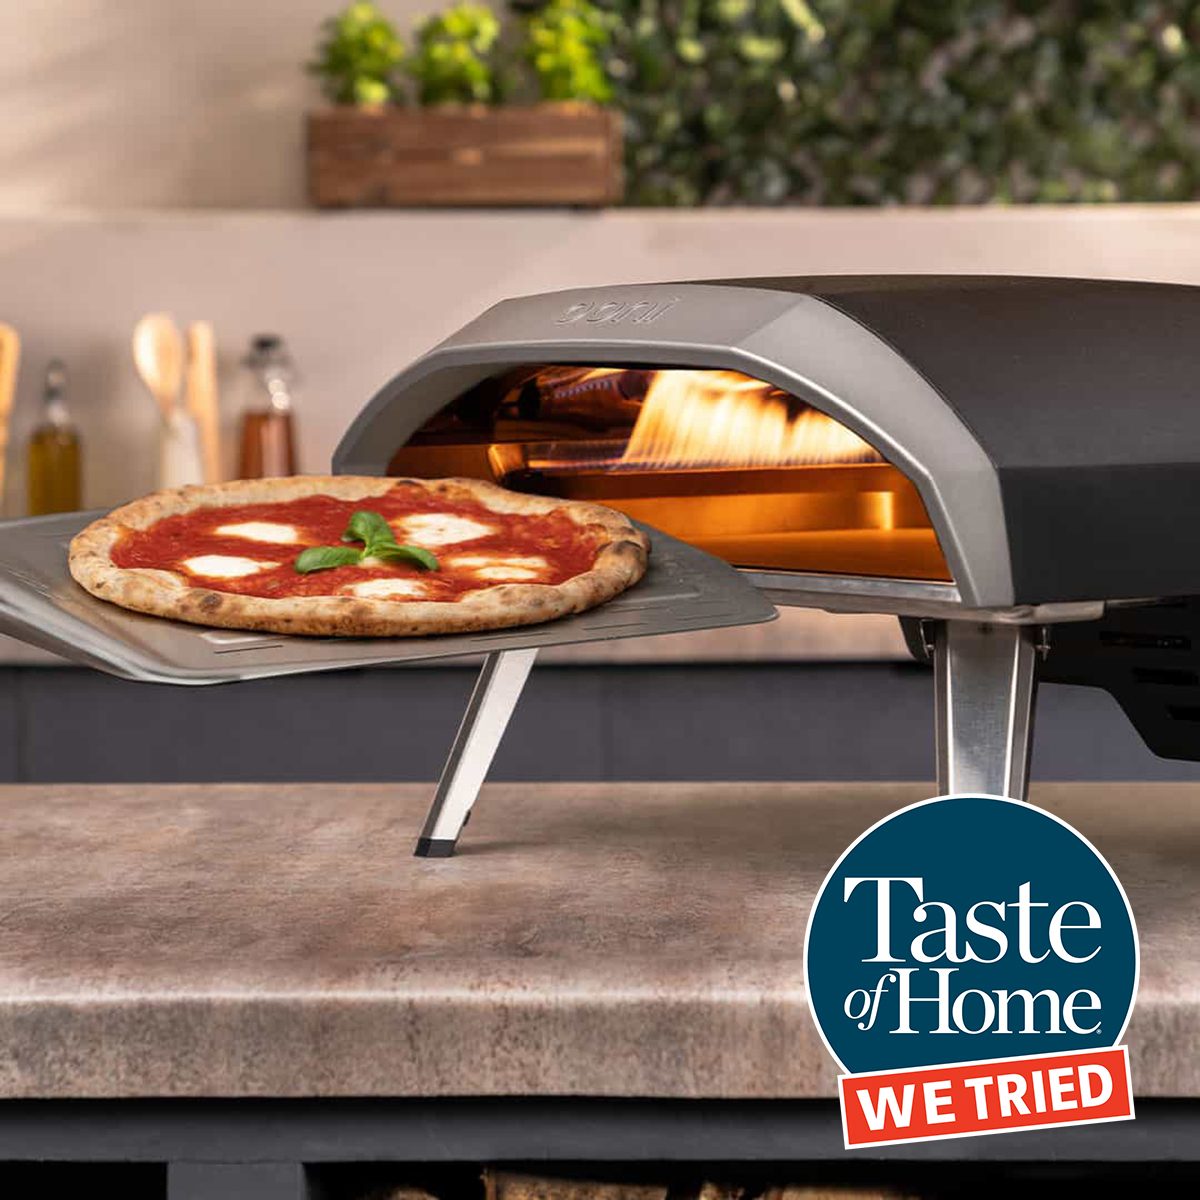 https://www.tasteofhome.com/wp-content/uploads/2021/10/we-tried-ooni-pizza-oven-via-ooni.com-ecomm.jpg?fit=700%2C700